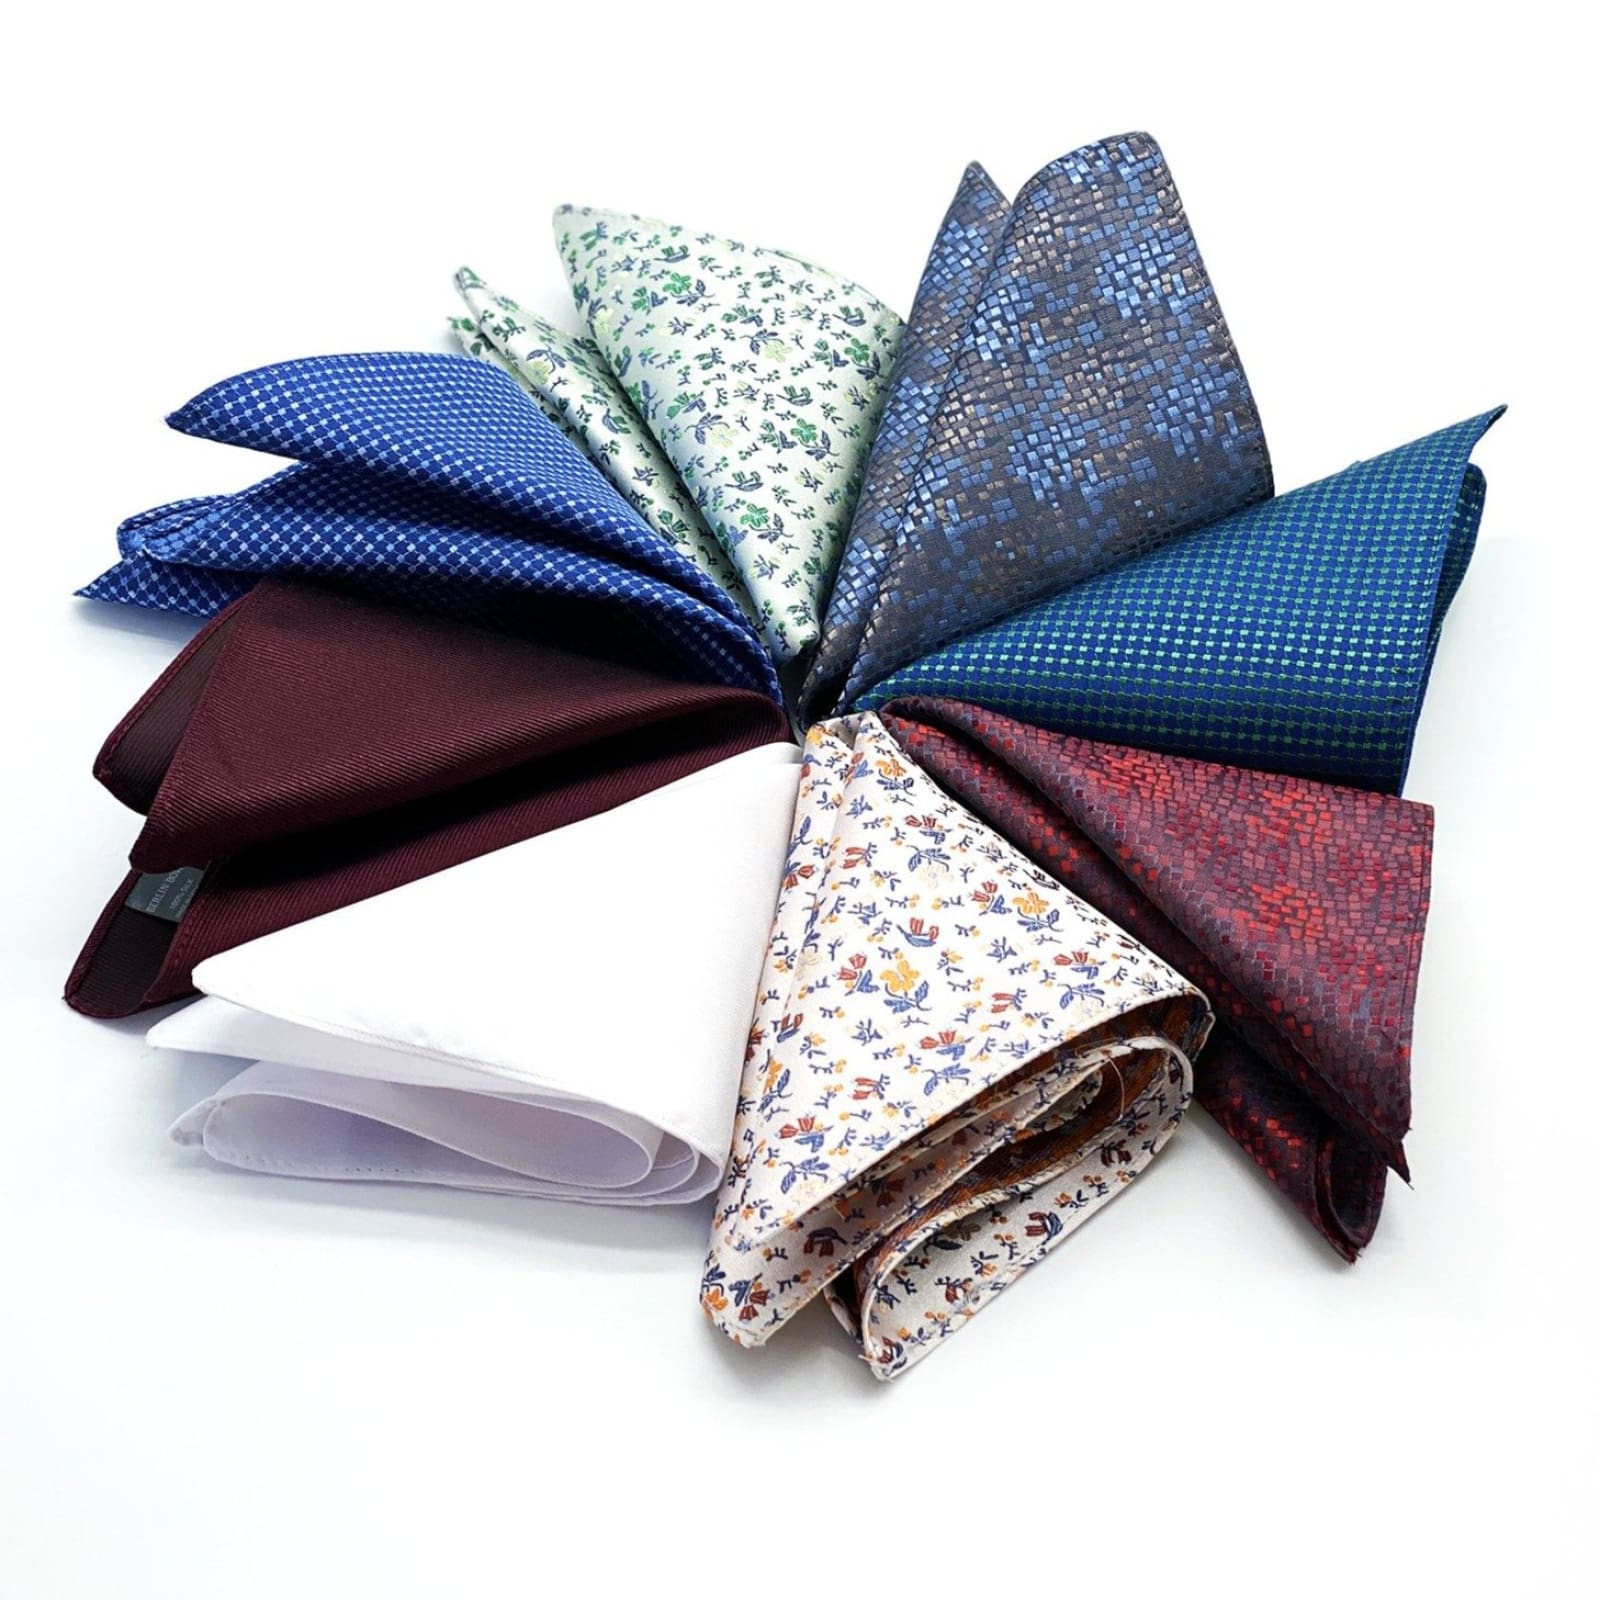 BERLIN BOW handkerchief - accessories